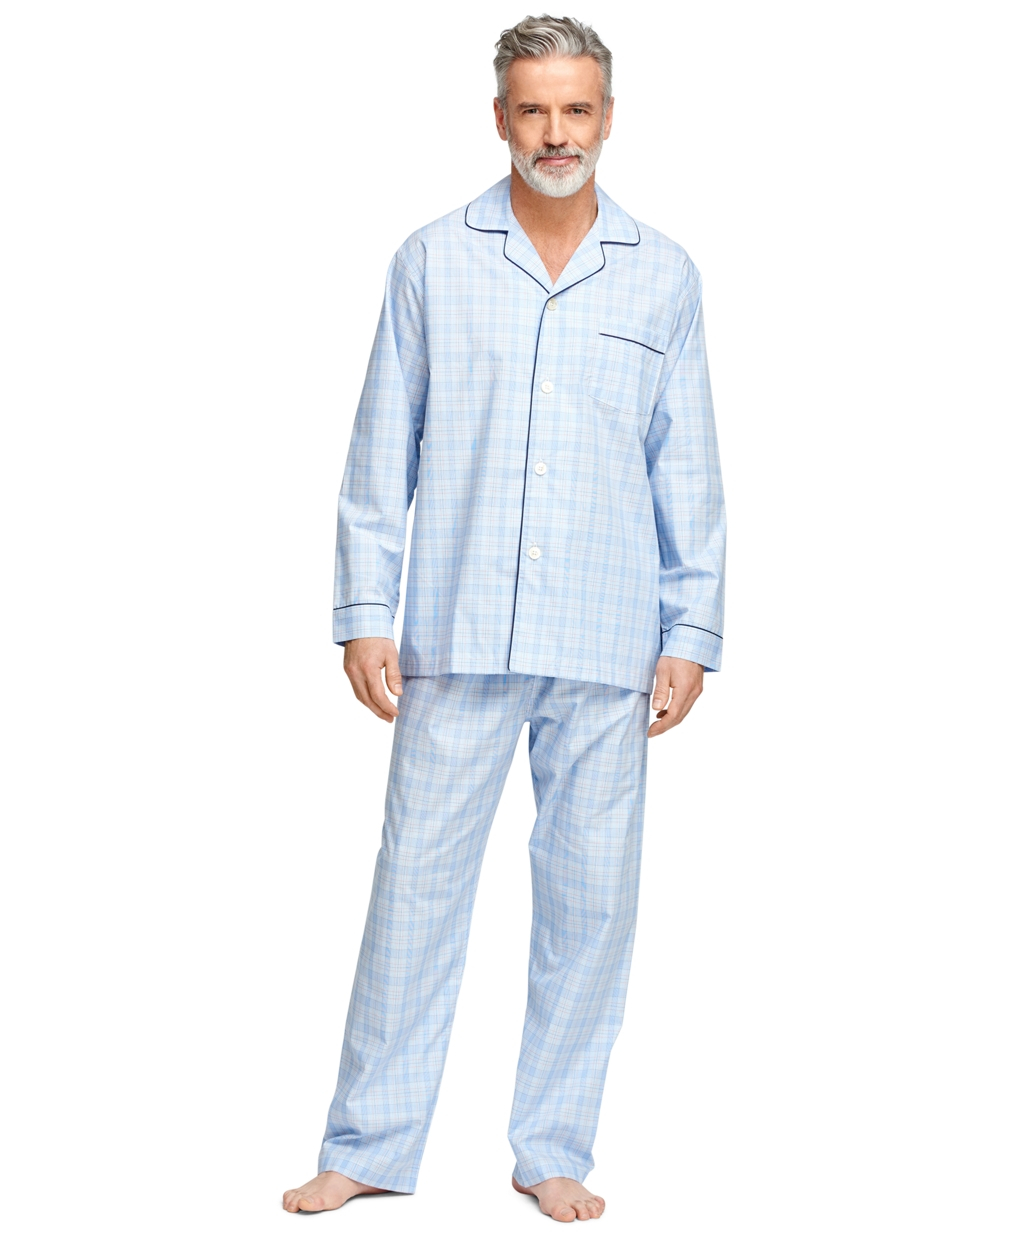 Brooks Brothers Pyjamas Cheapest Shopping, Save 52% | jlcatj.gob.mx